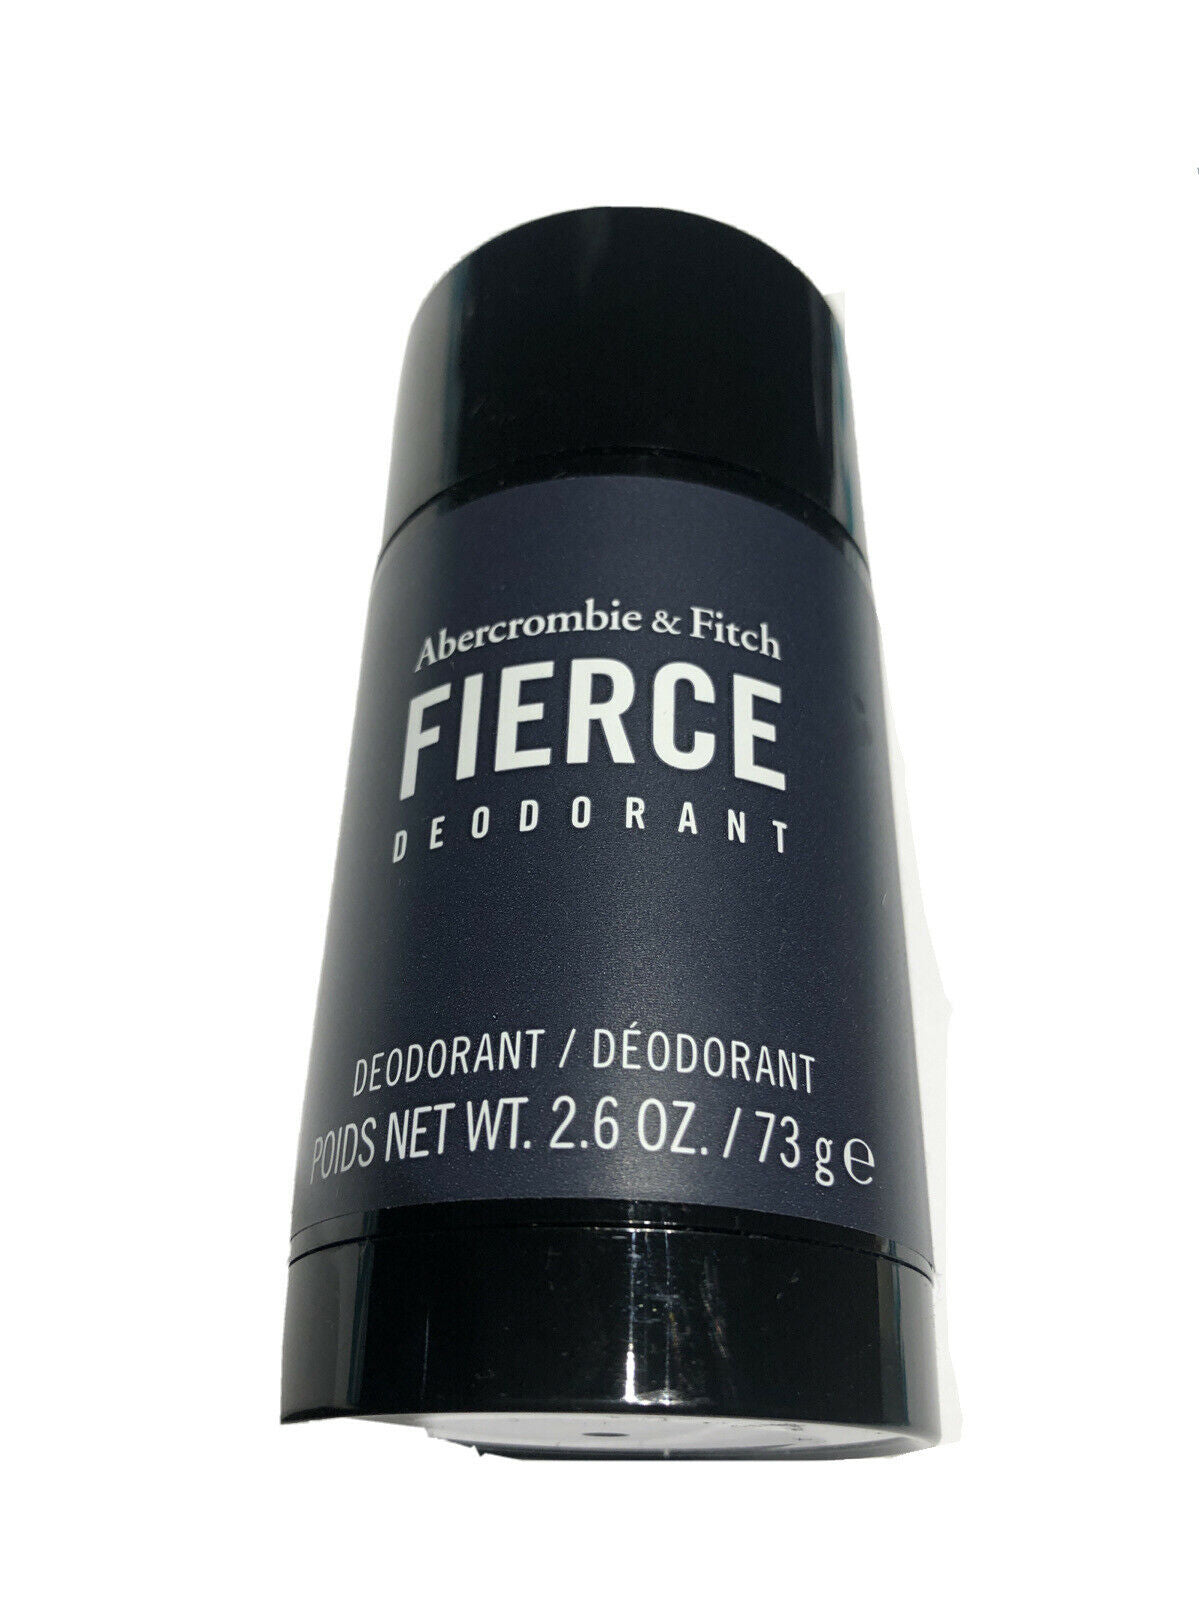 ABERCROMBIE & FITCH FIERCE Deodorant Stick Solid FOR MEN 2.6 Oz 73 g – DALEY1DEALS,LLC.